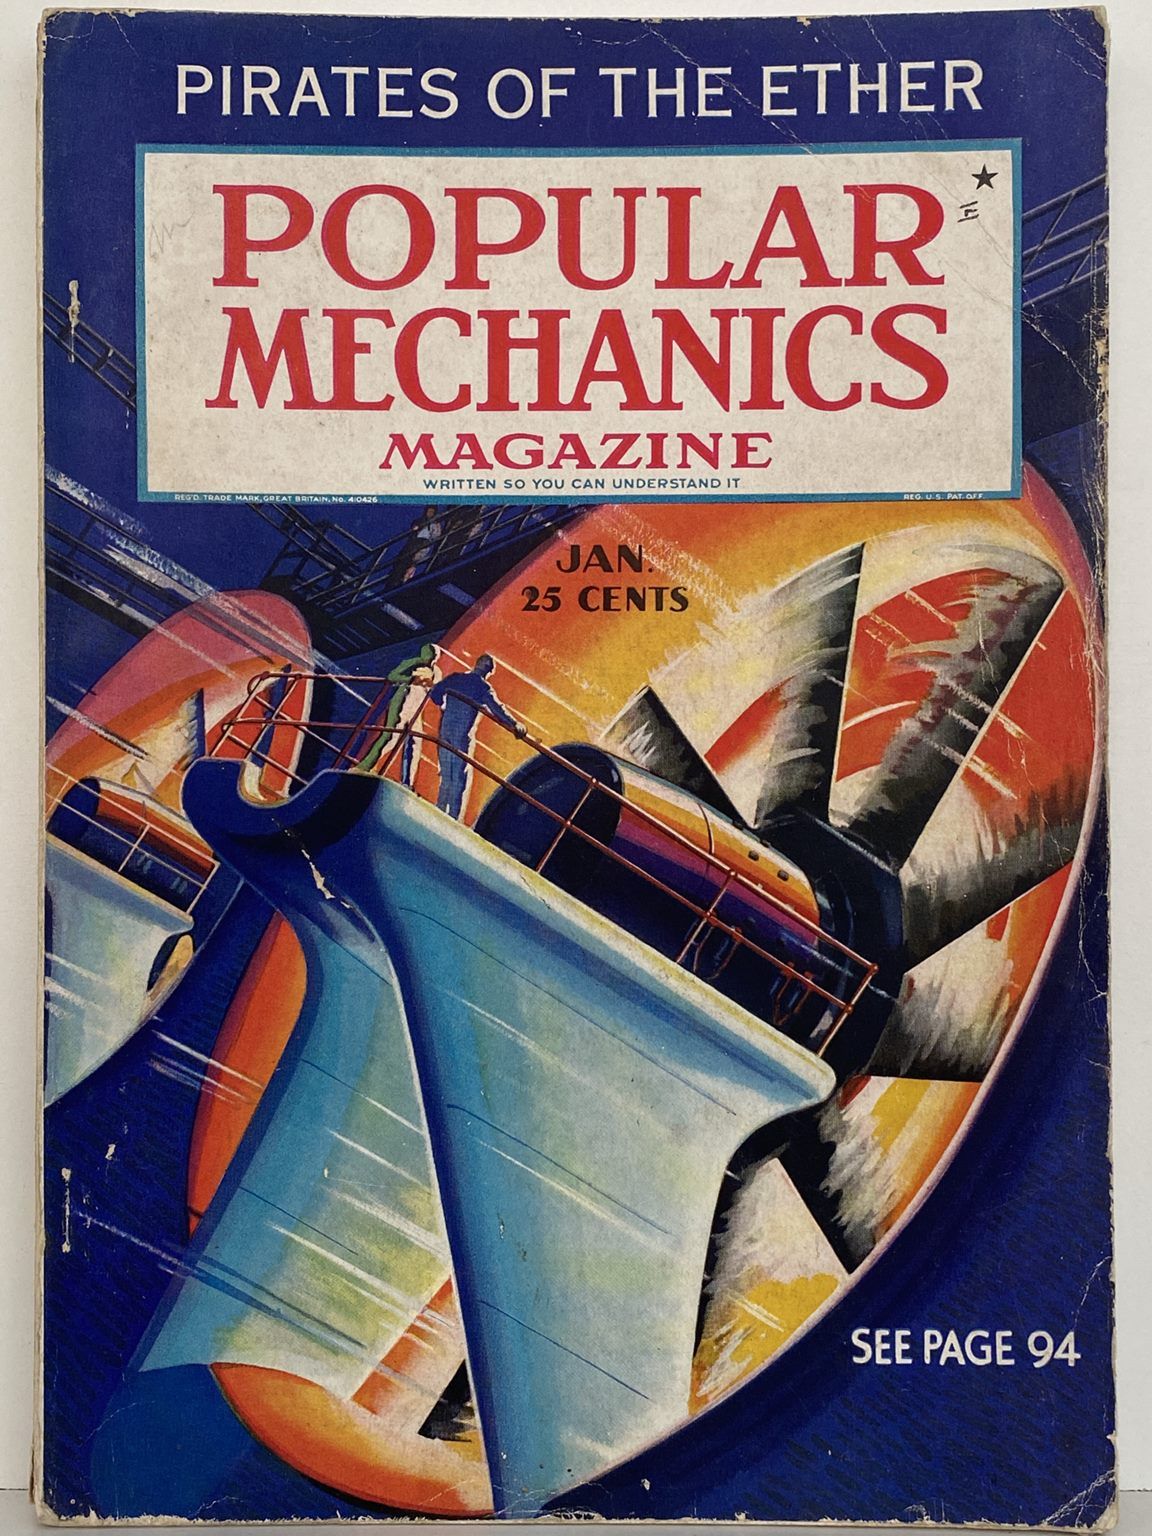 VINTAGE MAGAZINE: Popular Mechanics - Vol. 65, No. 1 - January 1936